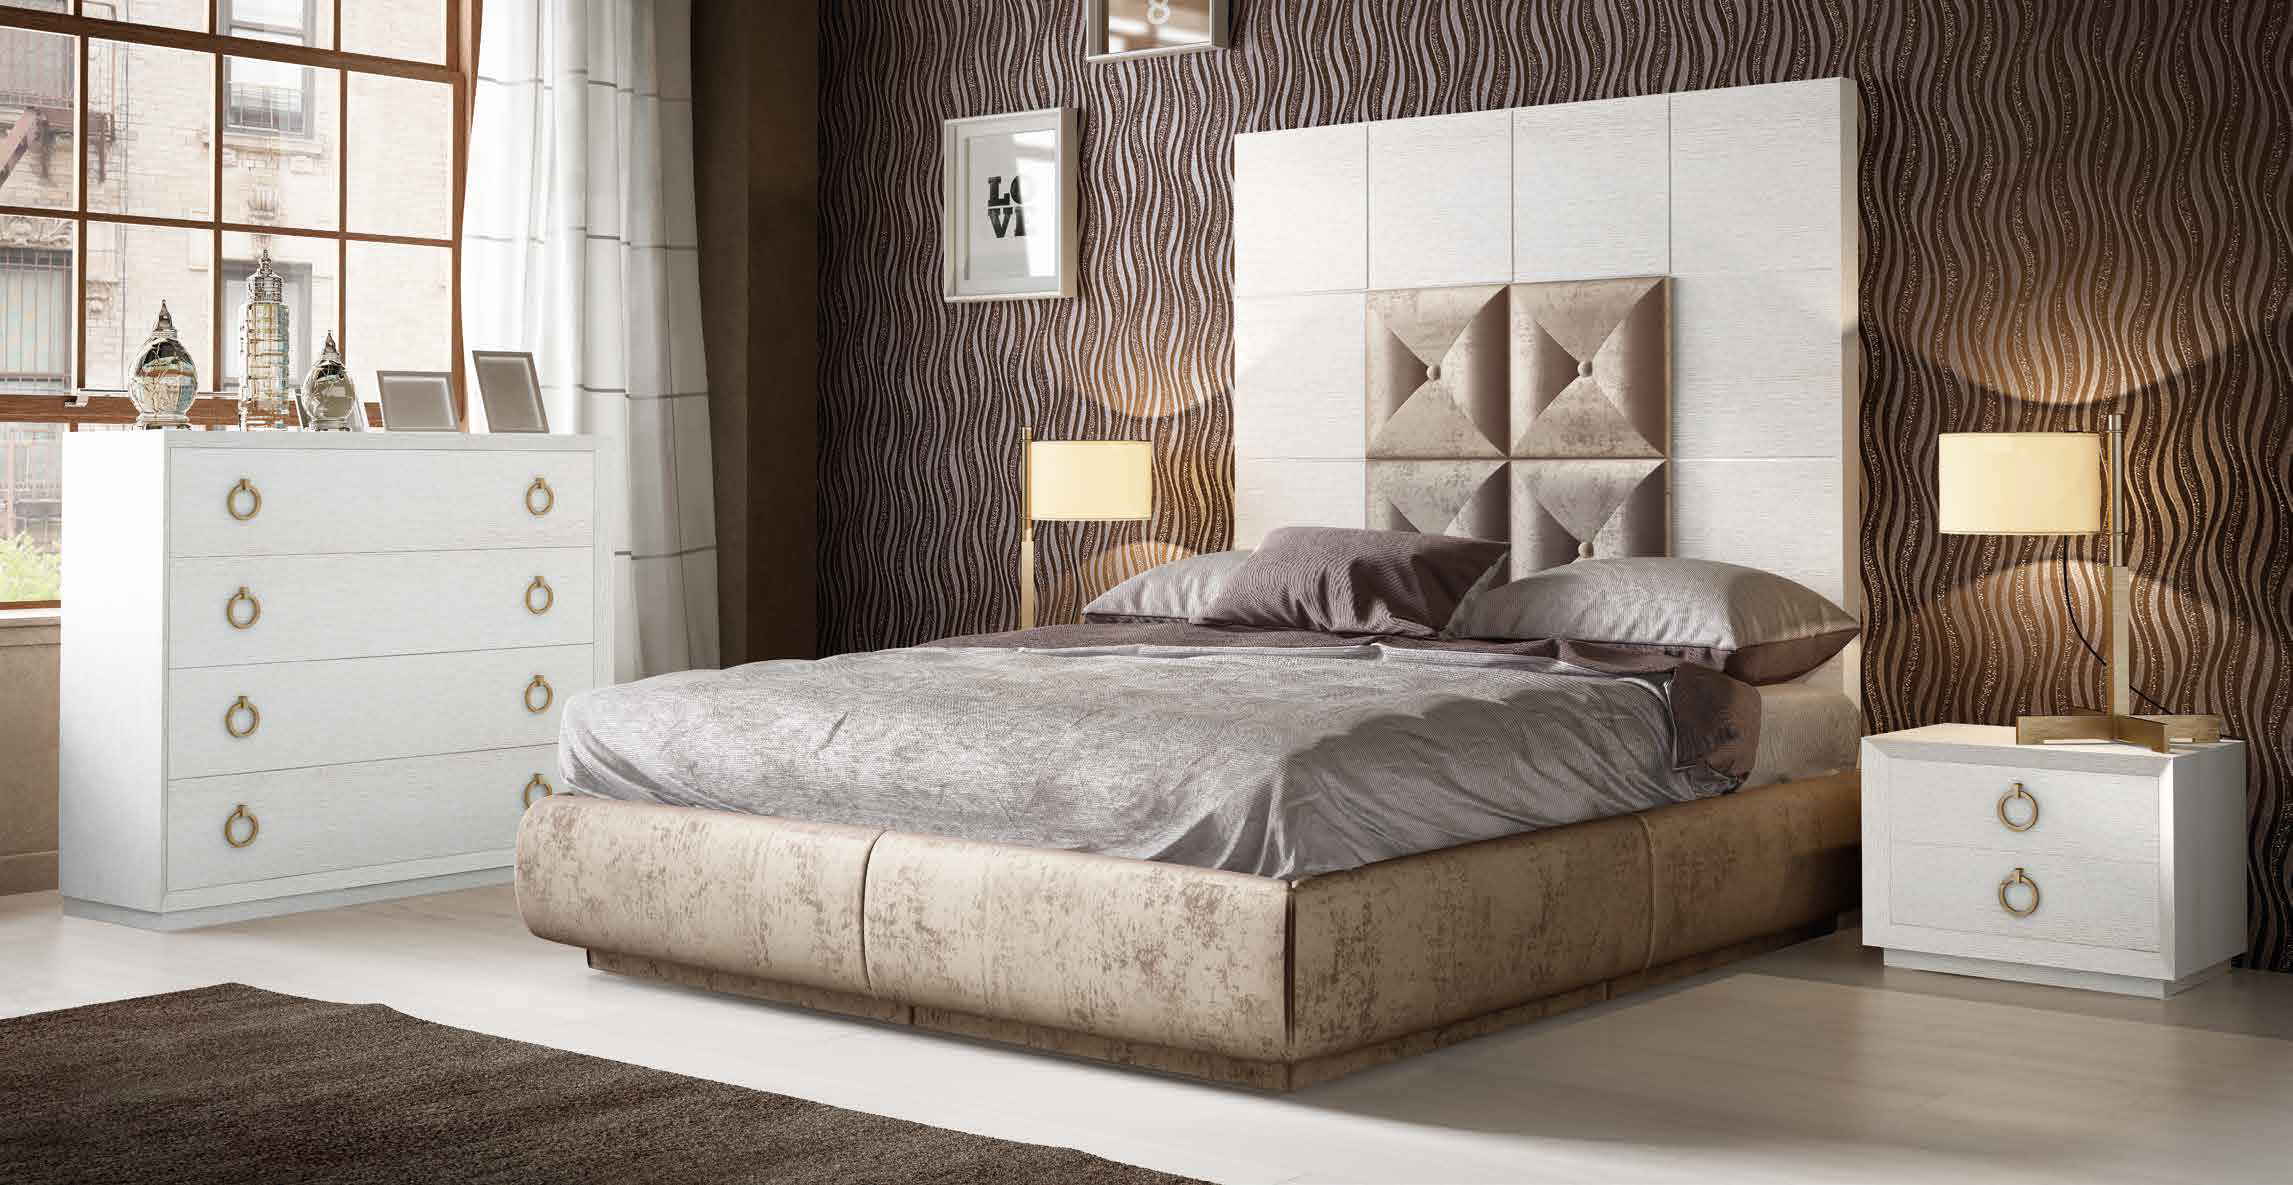 Brands Franco Furniture Bedrooms vol1, Spain DOR 73